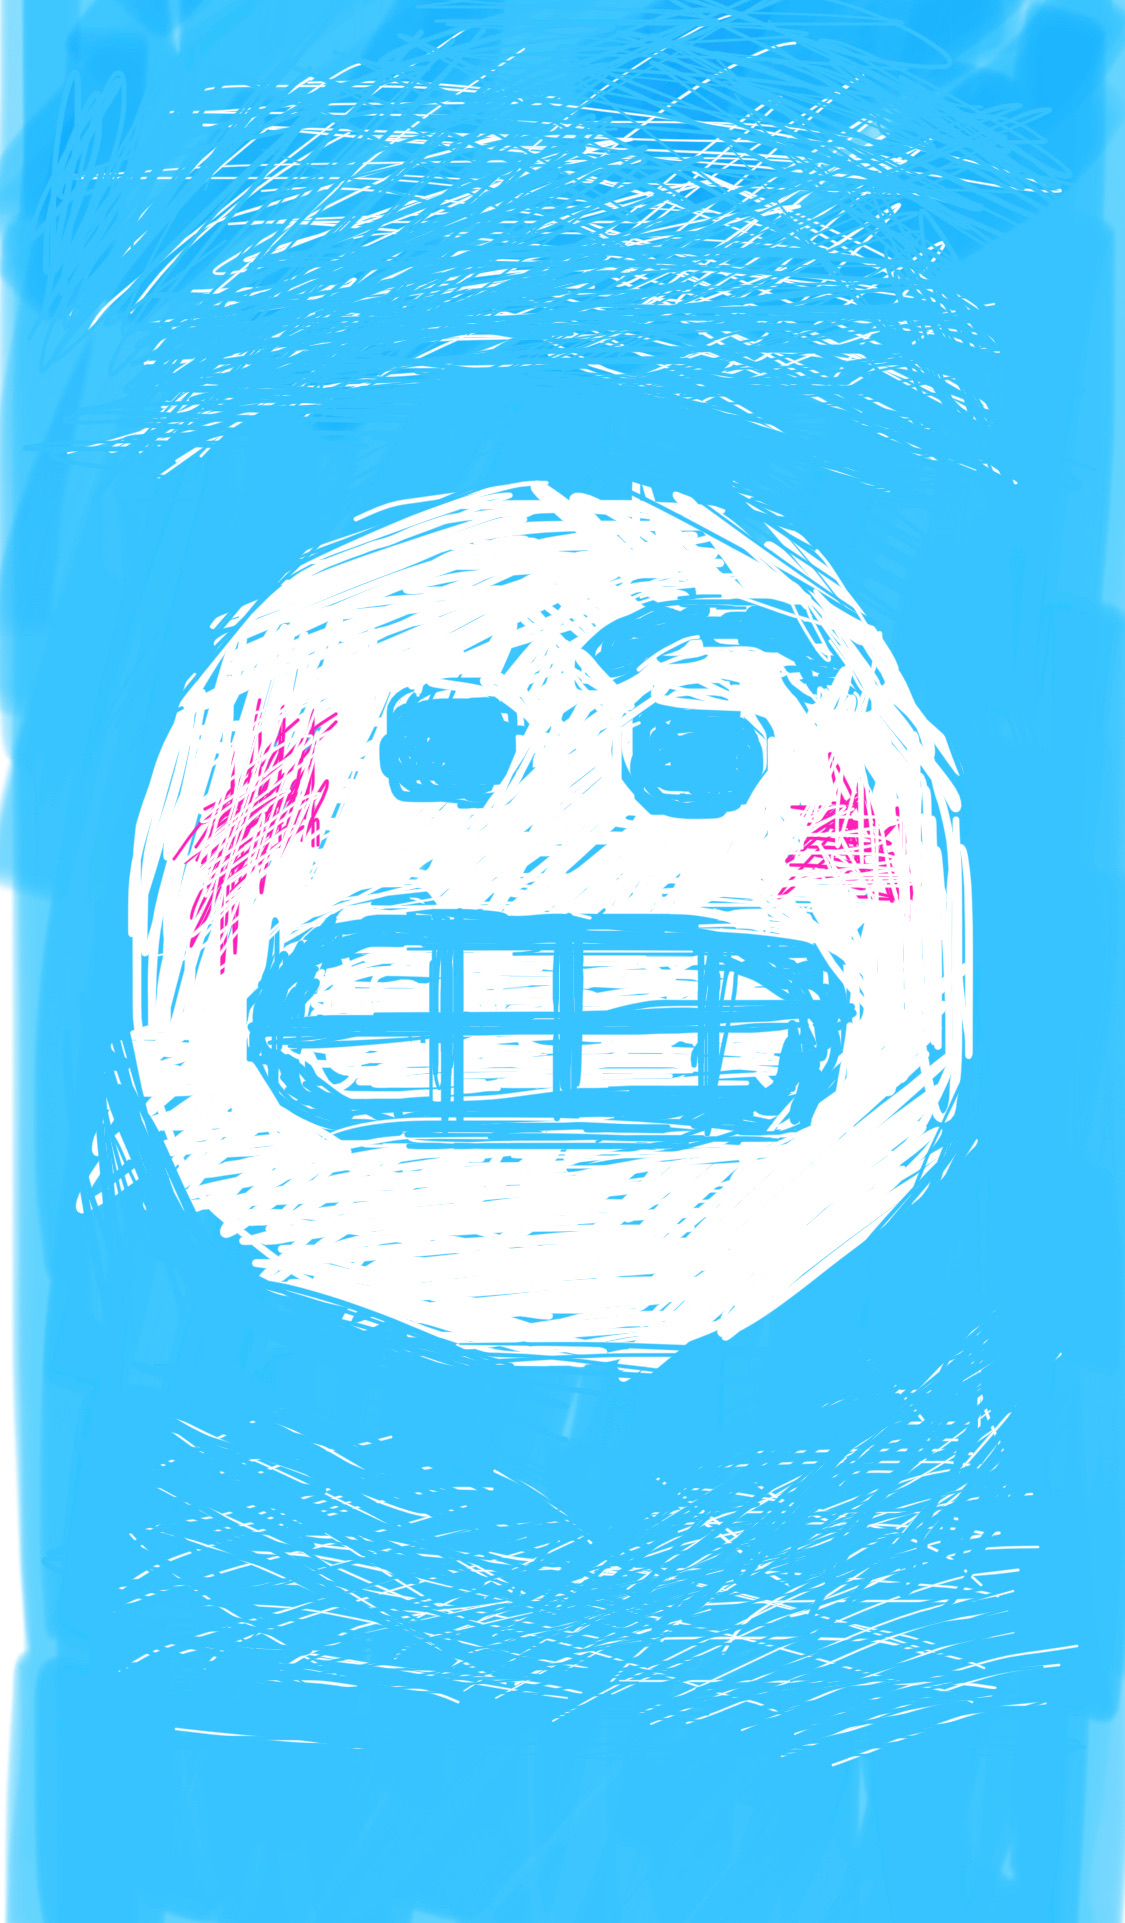 An emoji-like face raising an eyebrow on a blue background